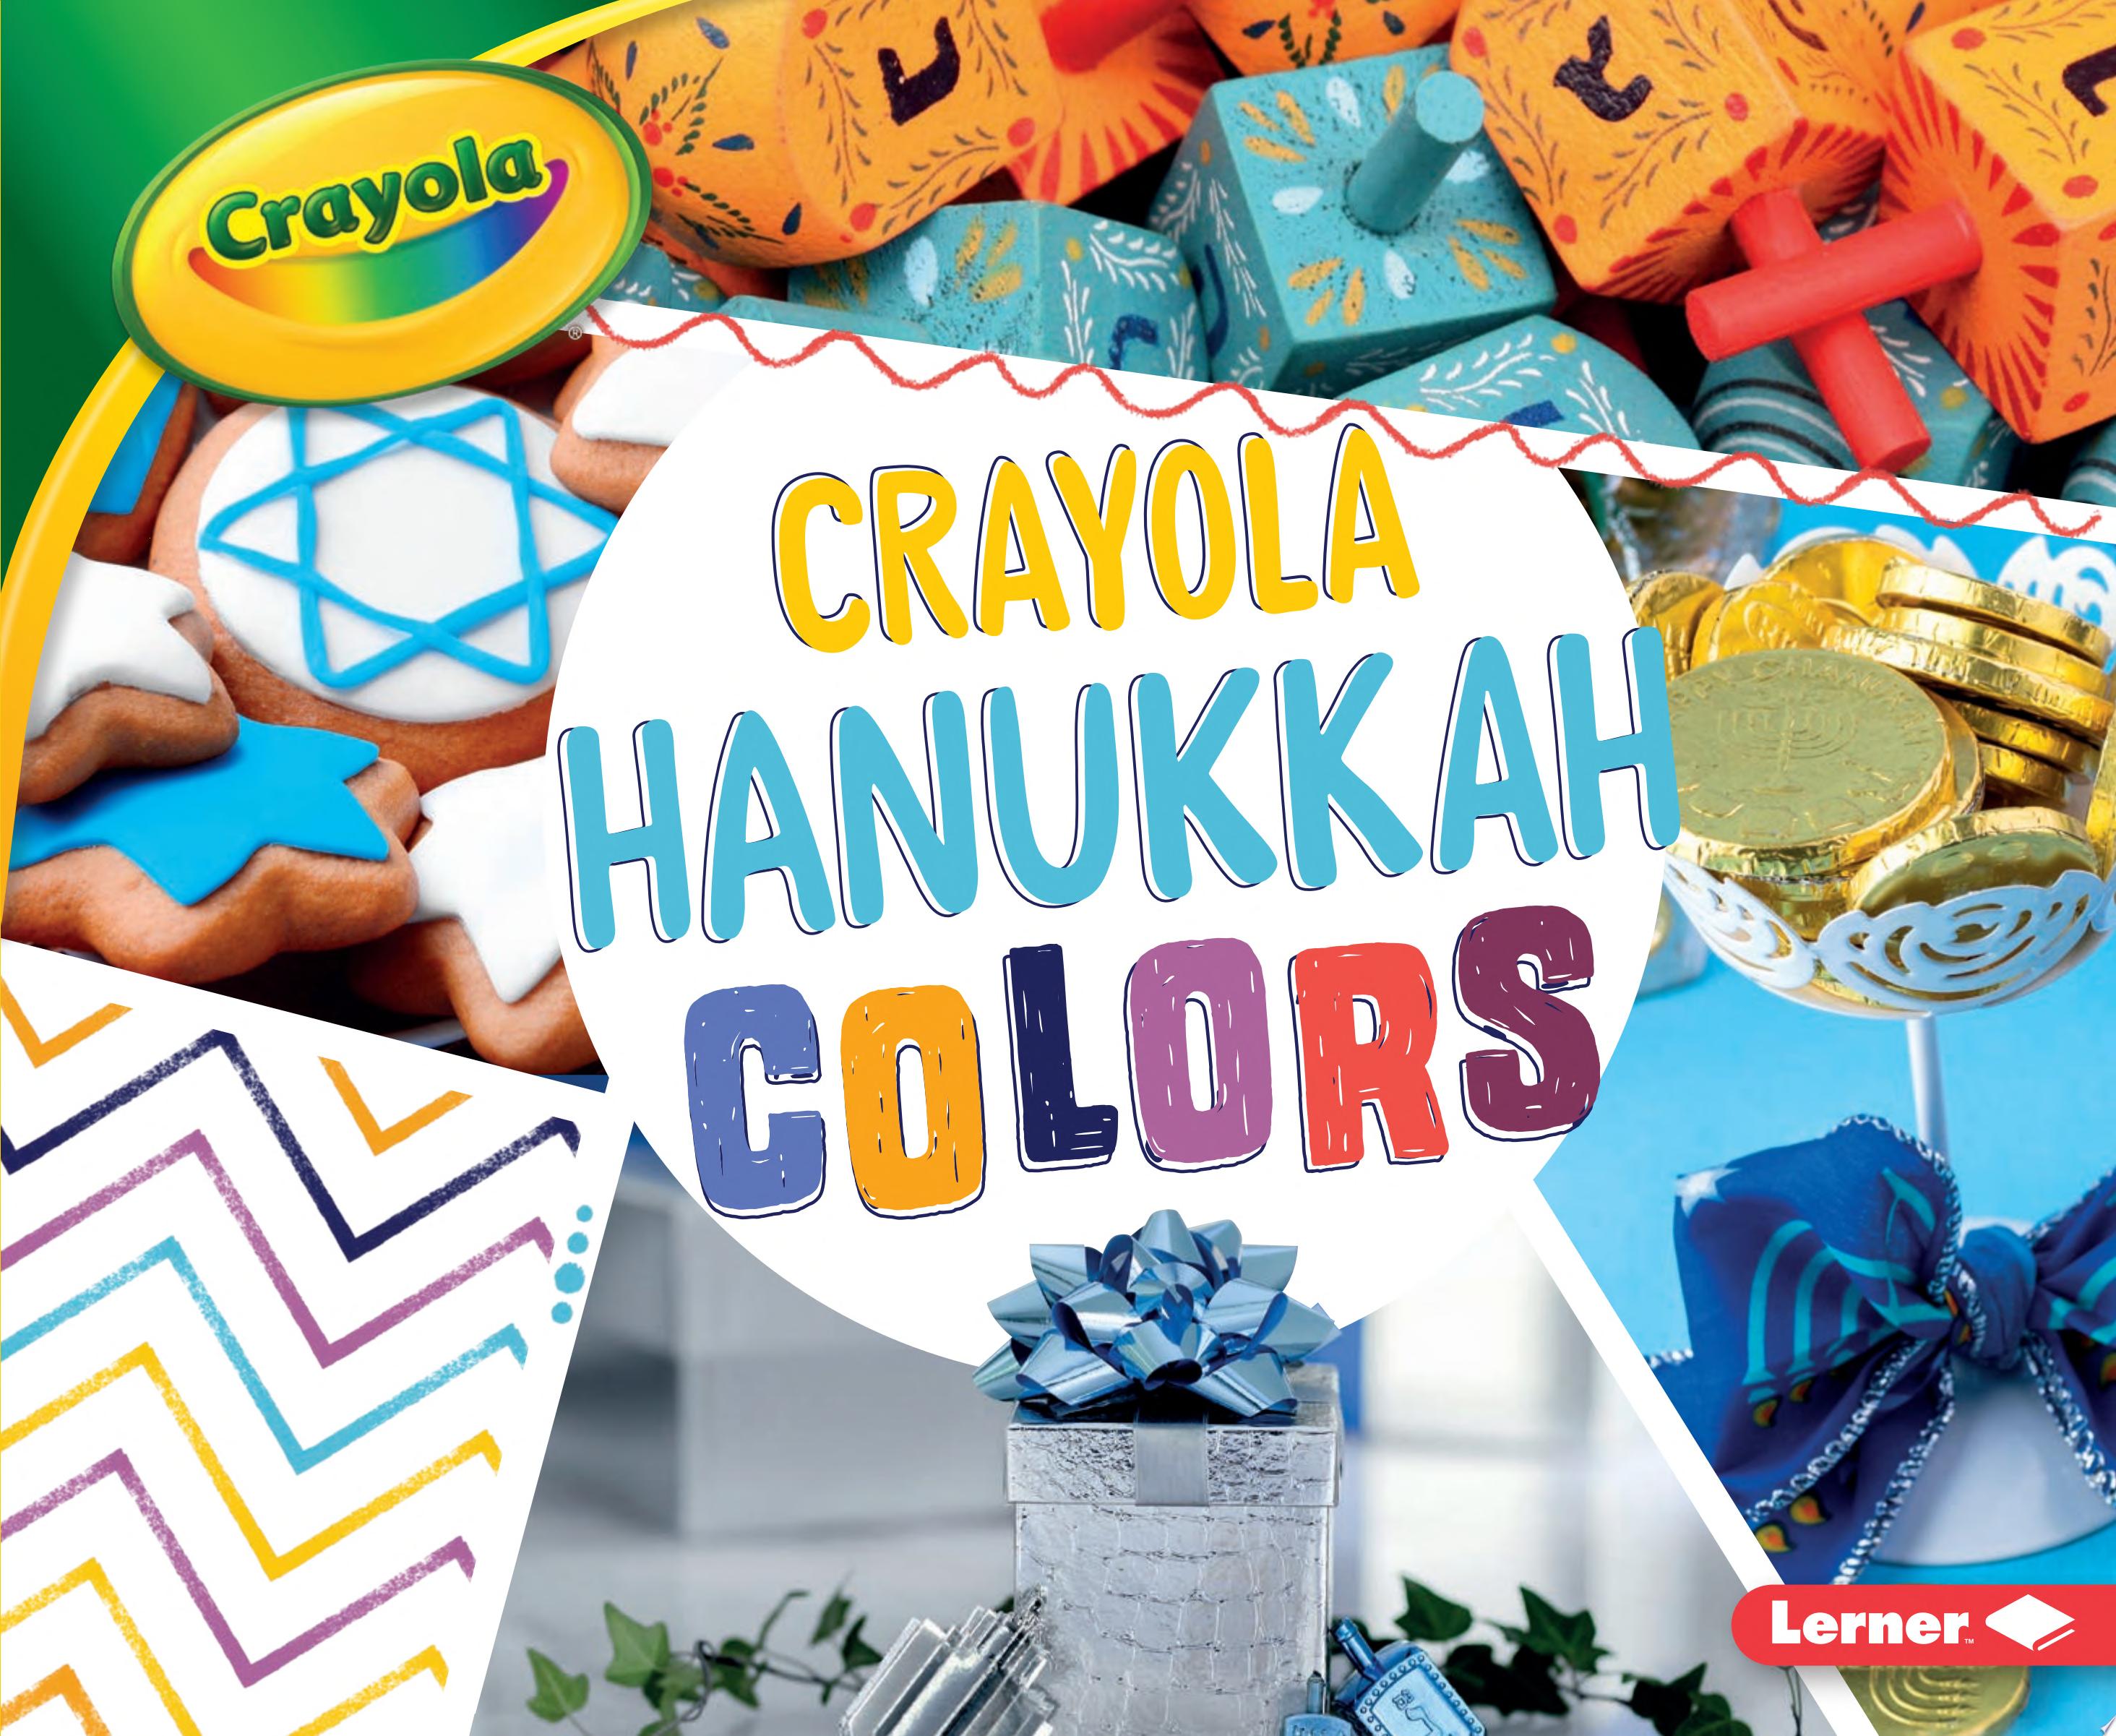 Image for "Crayola ® Hanukkah Colors"